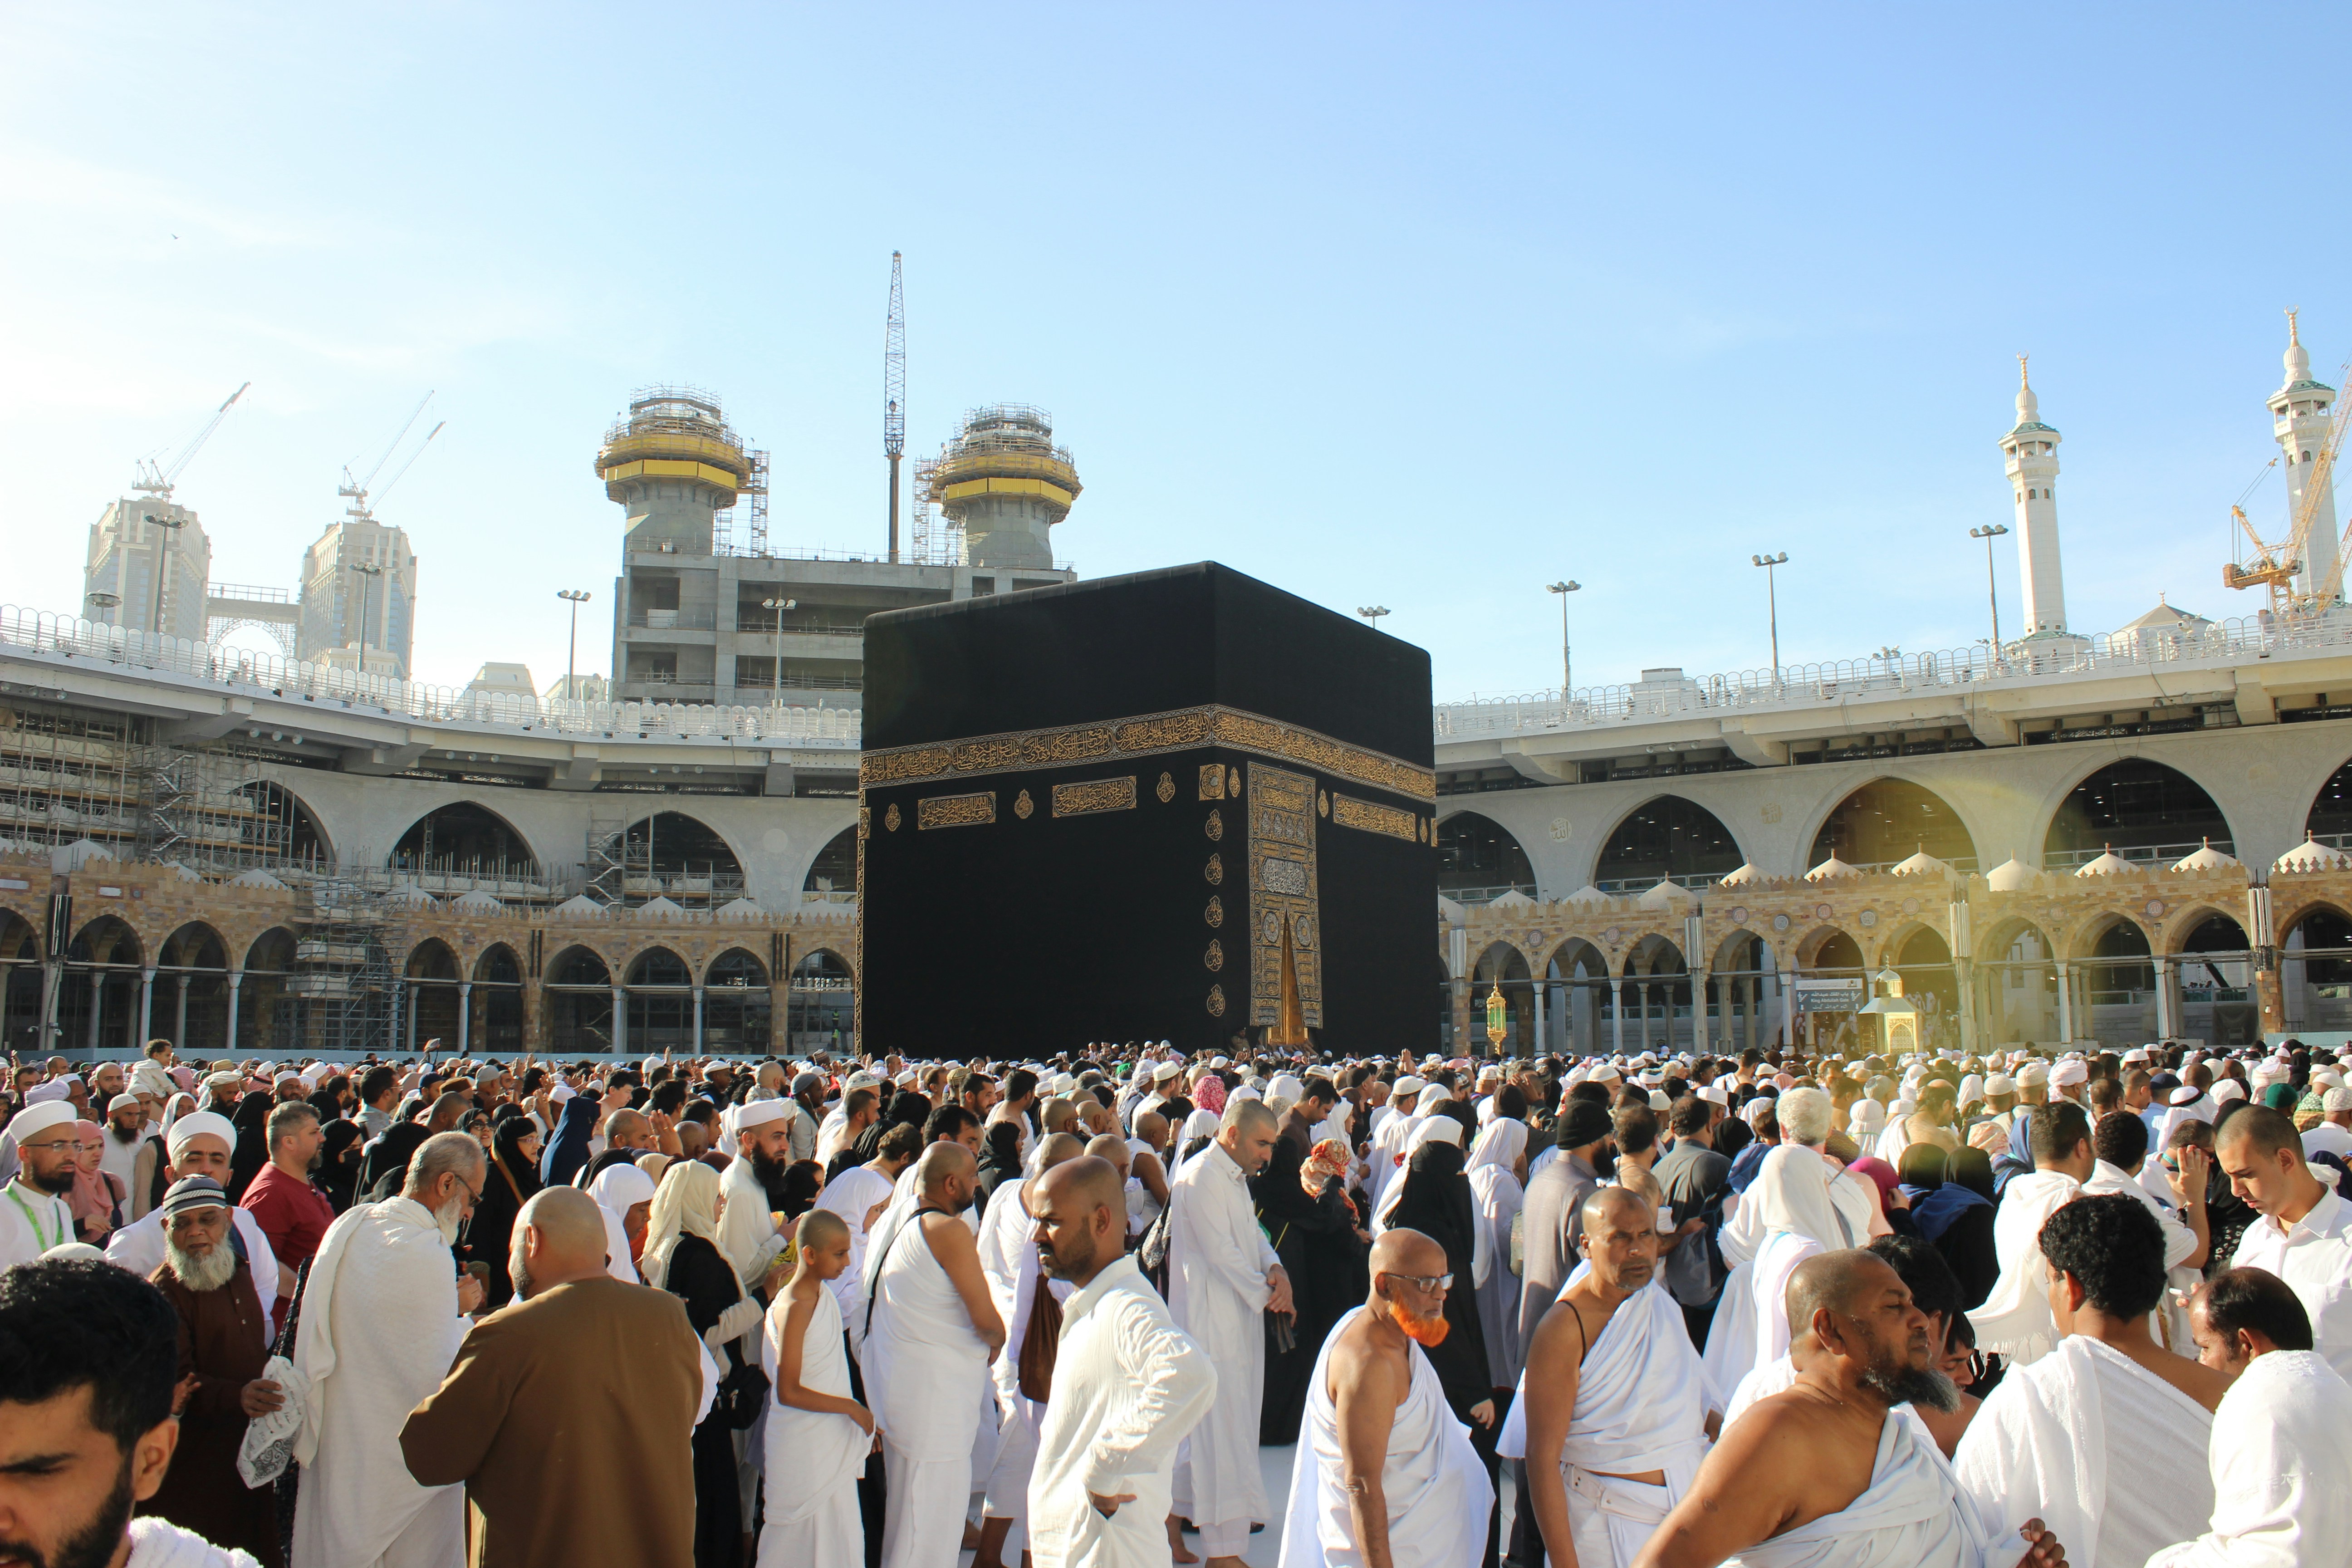 Undeterred by the scorching heat, pilgrims are determined to fulfil the Haj rituals : ibrahim uz, Unsplash Unsplash license